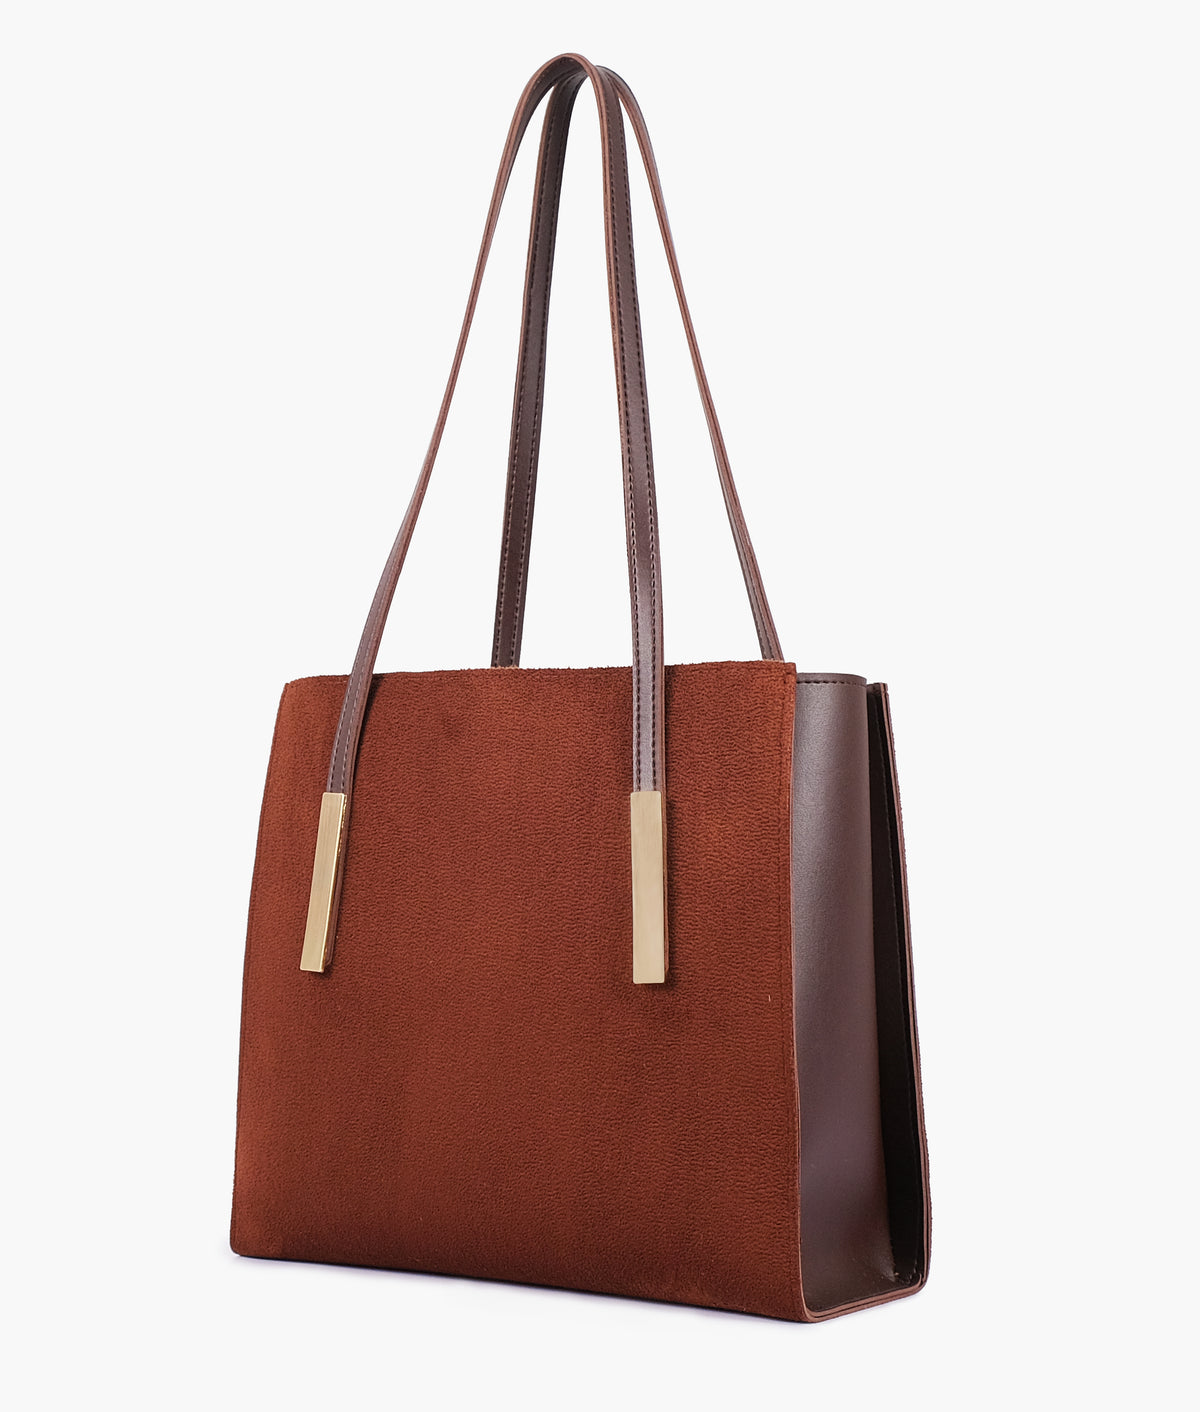 Dark brown suede zipper shoulder bag with long handle